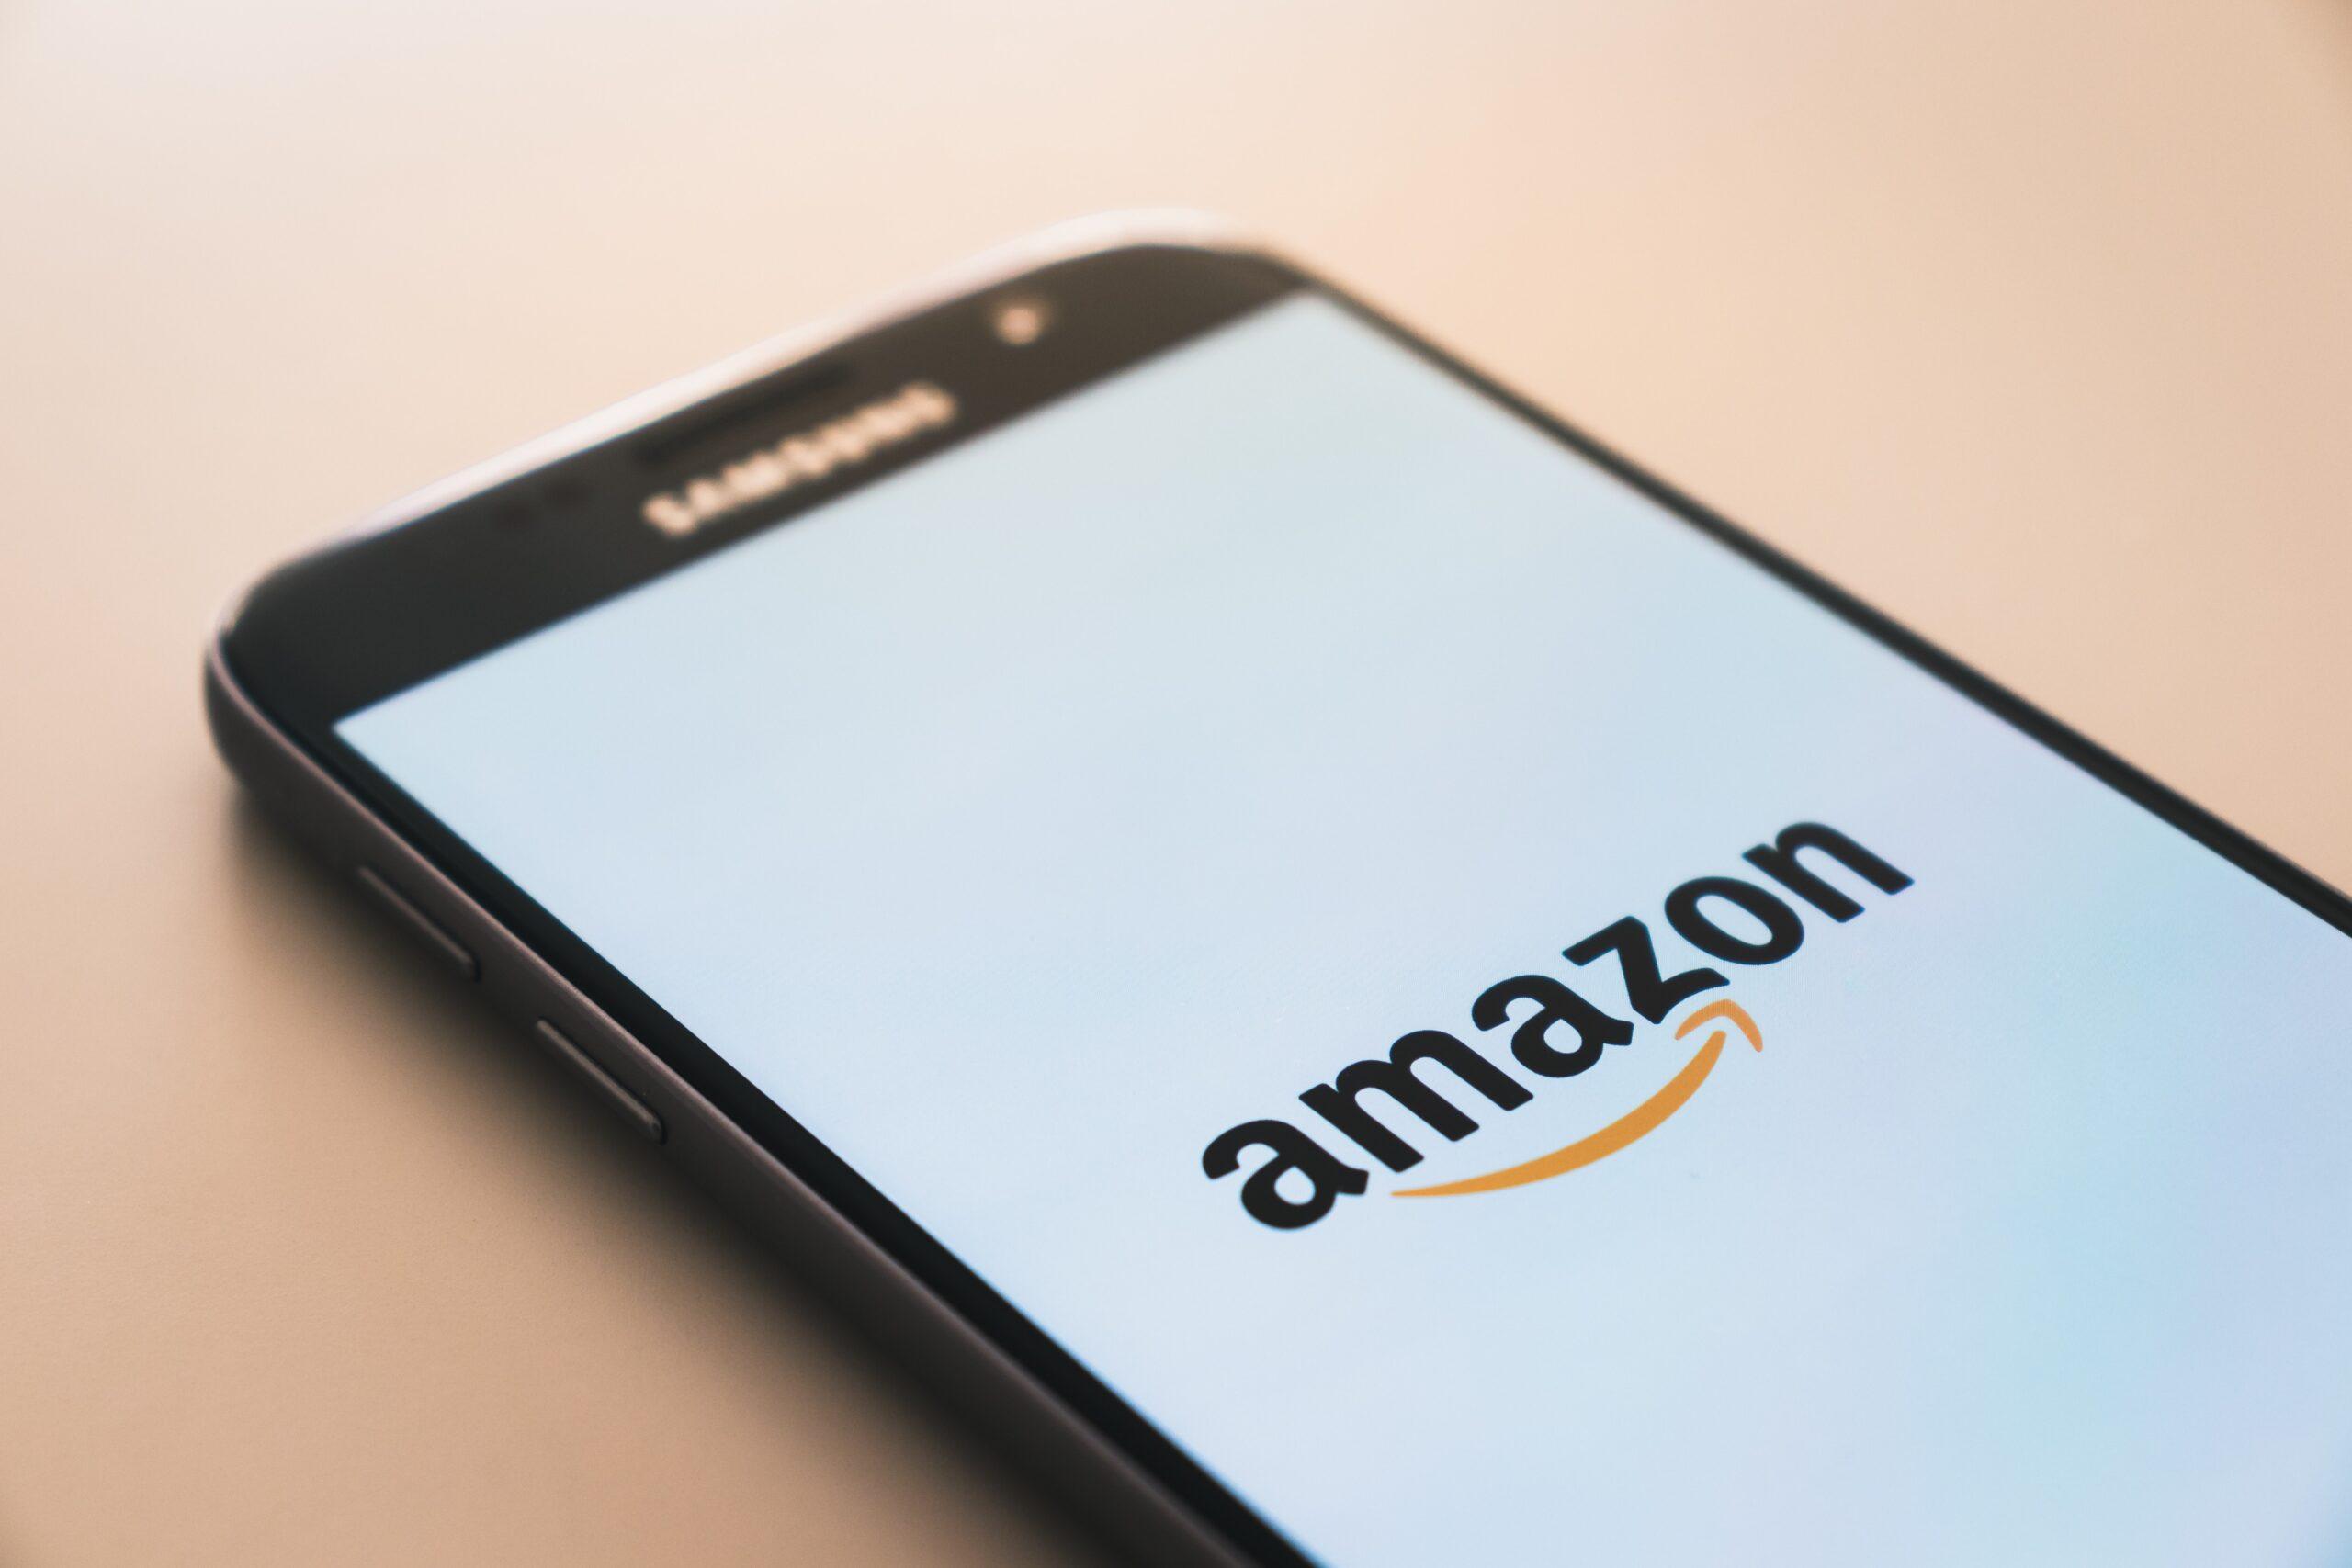 Avalanche e Amazon fazem parceria